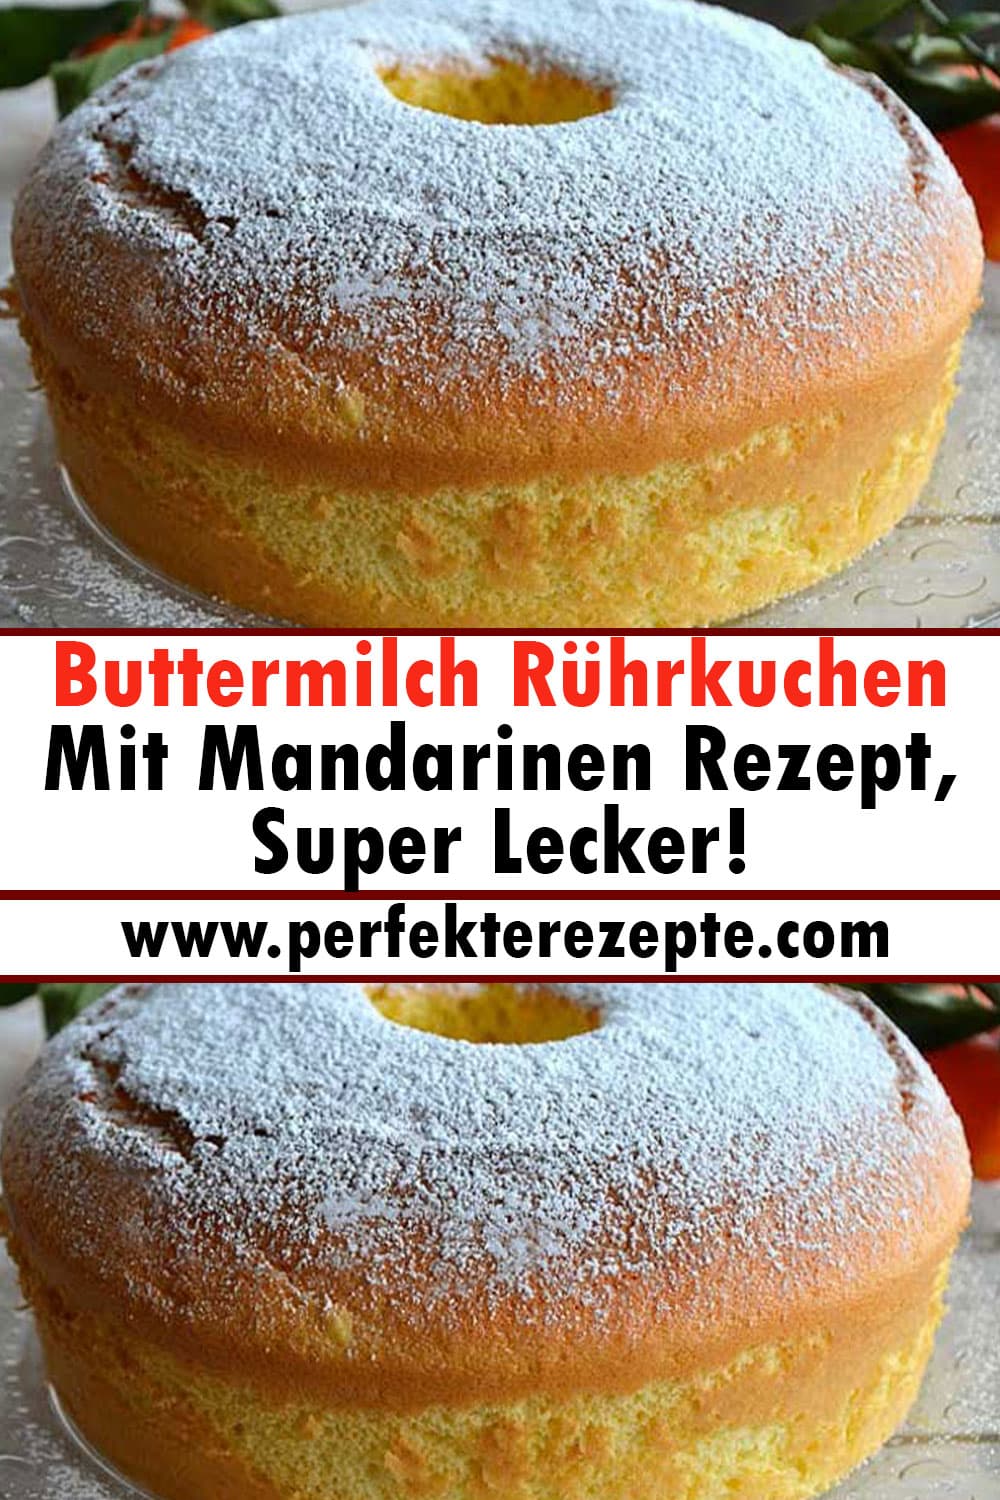 Buttermilch Rührkuchen Mit Mandarinen Rezept, Super Lecker!